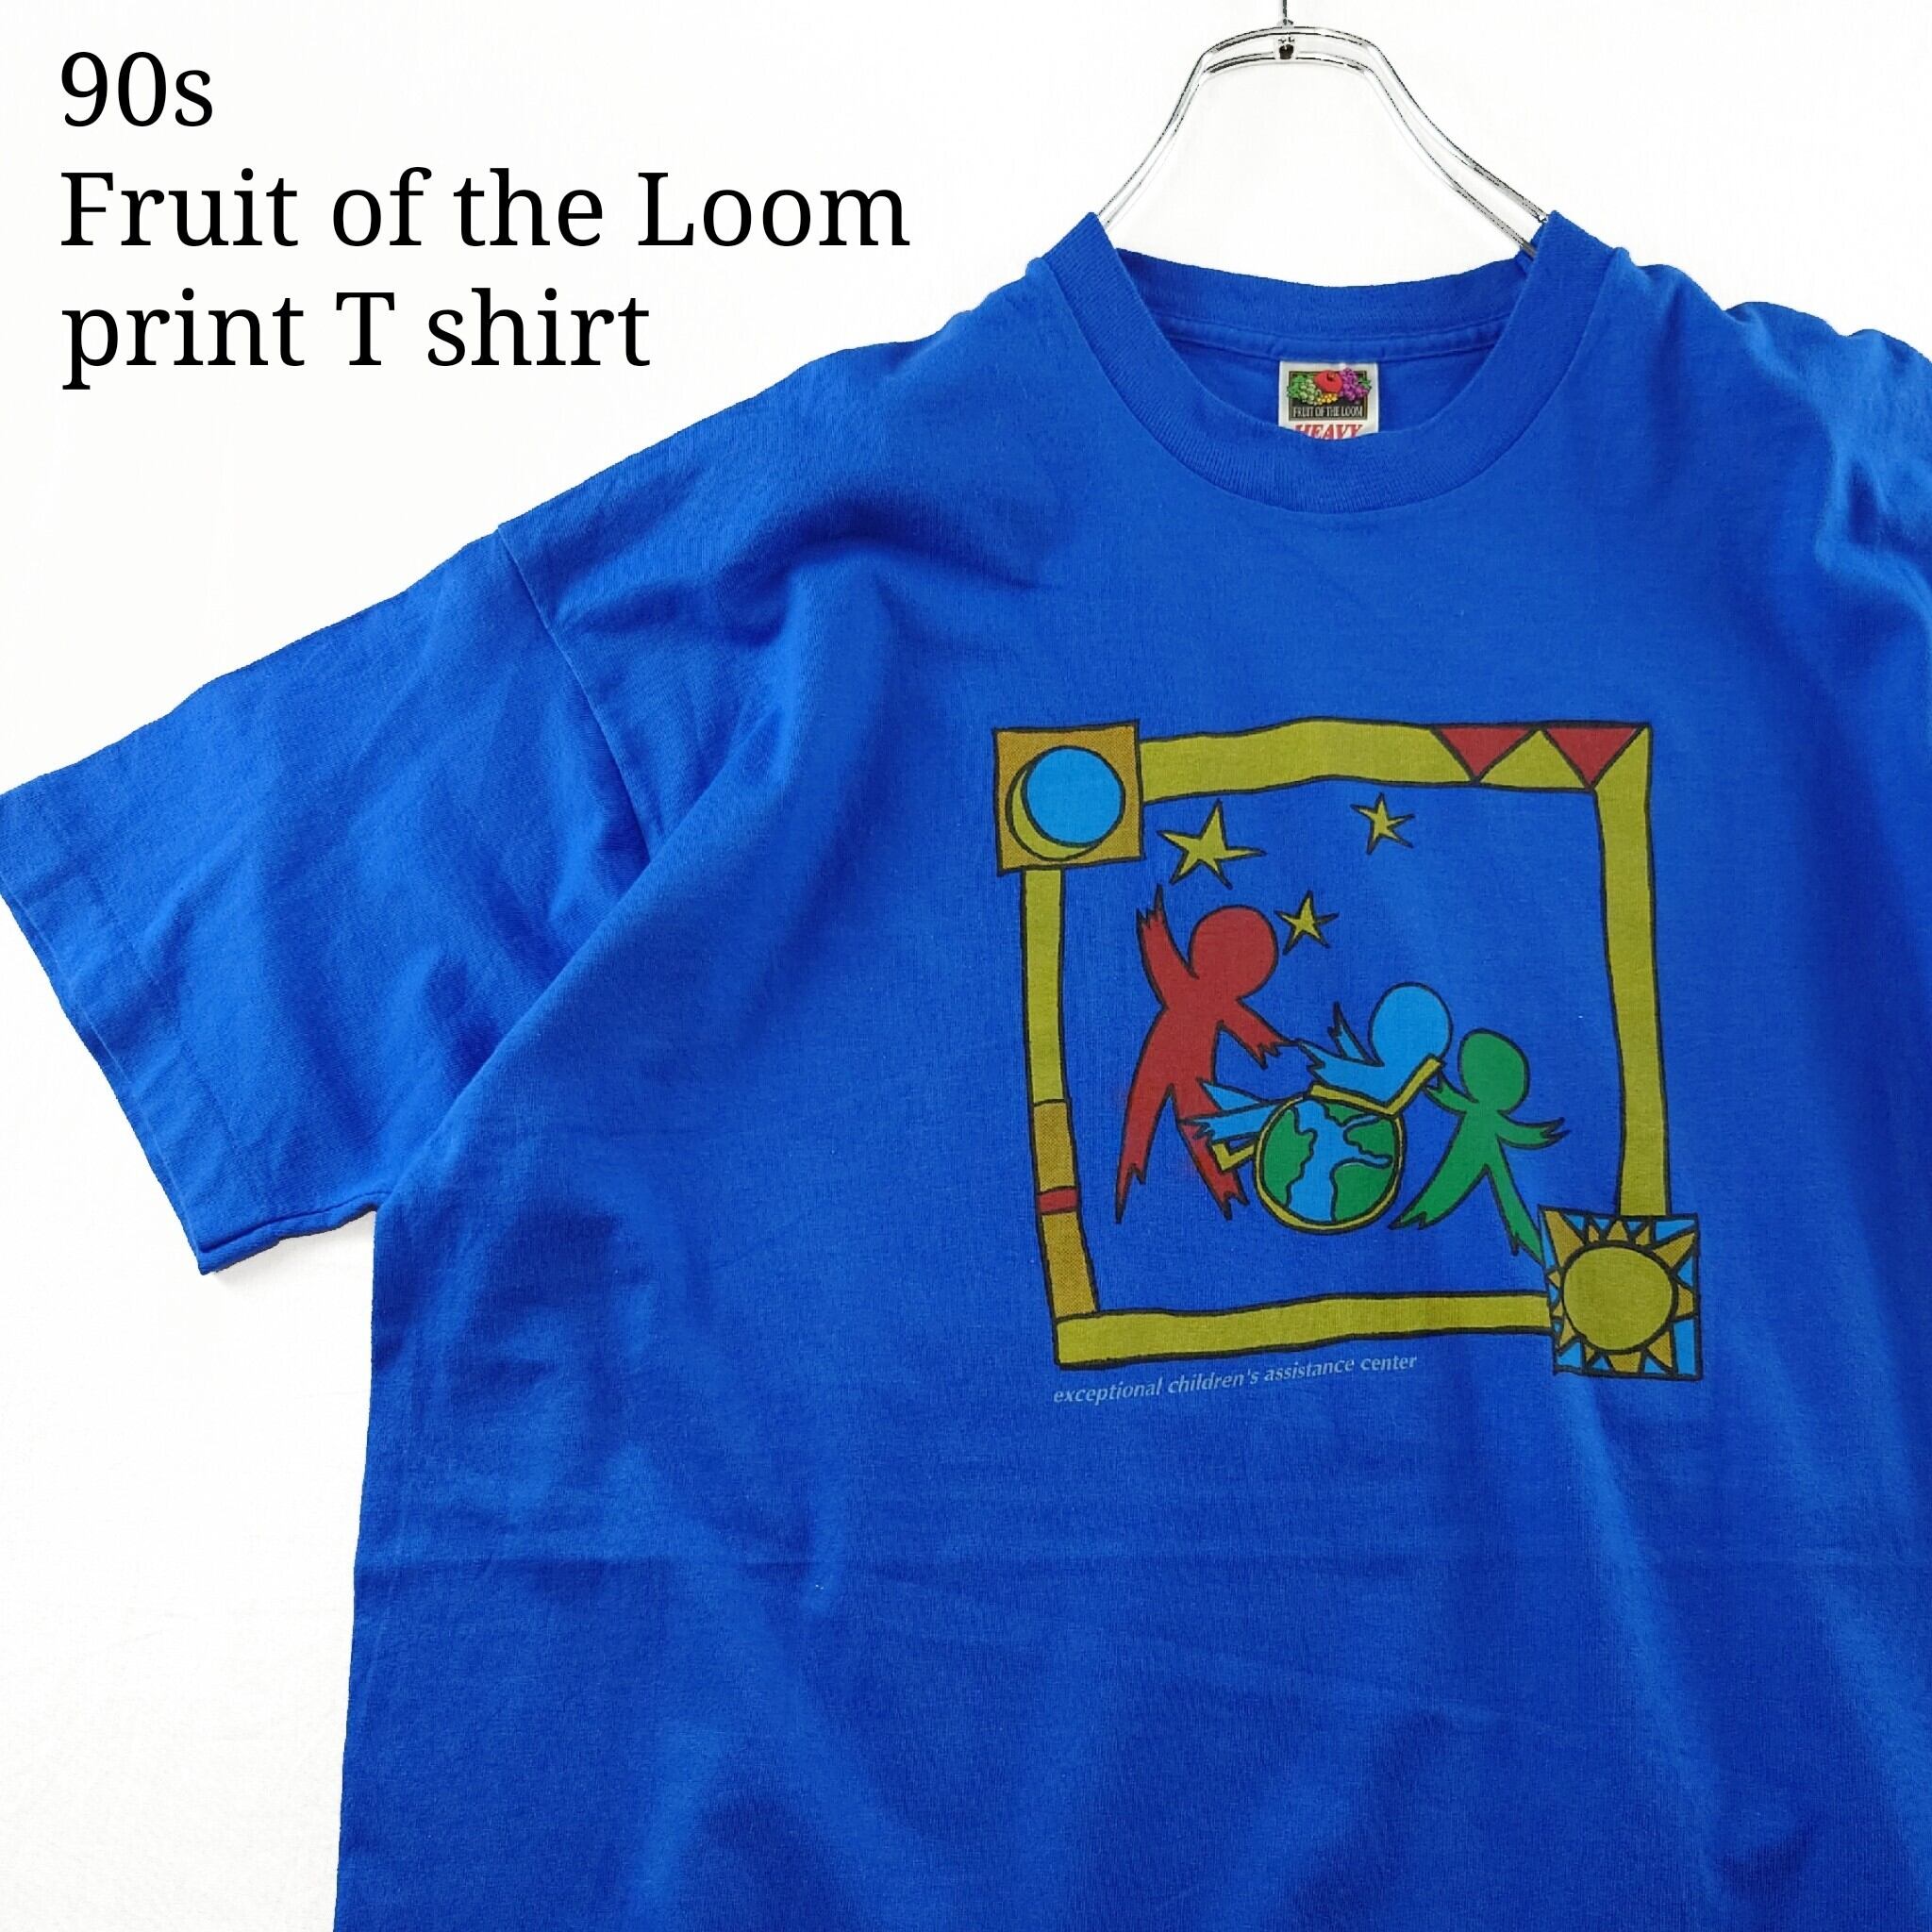 90s fruit of the loom best tシャツ